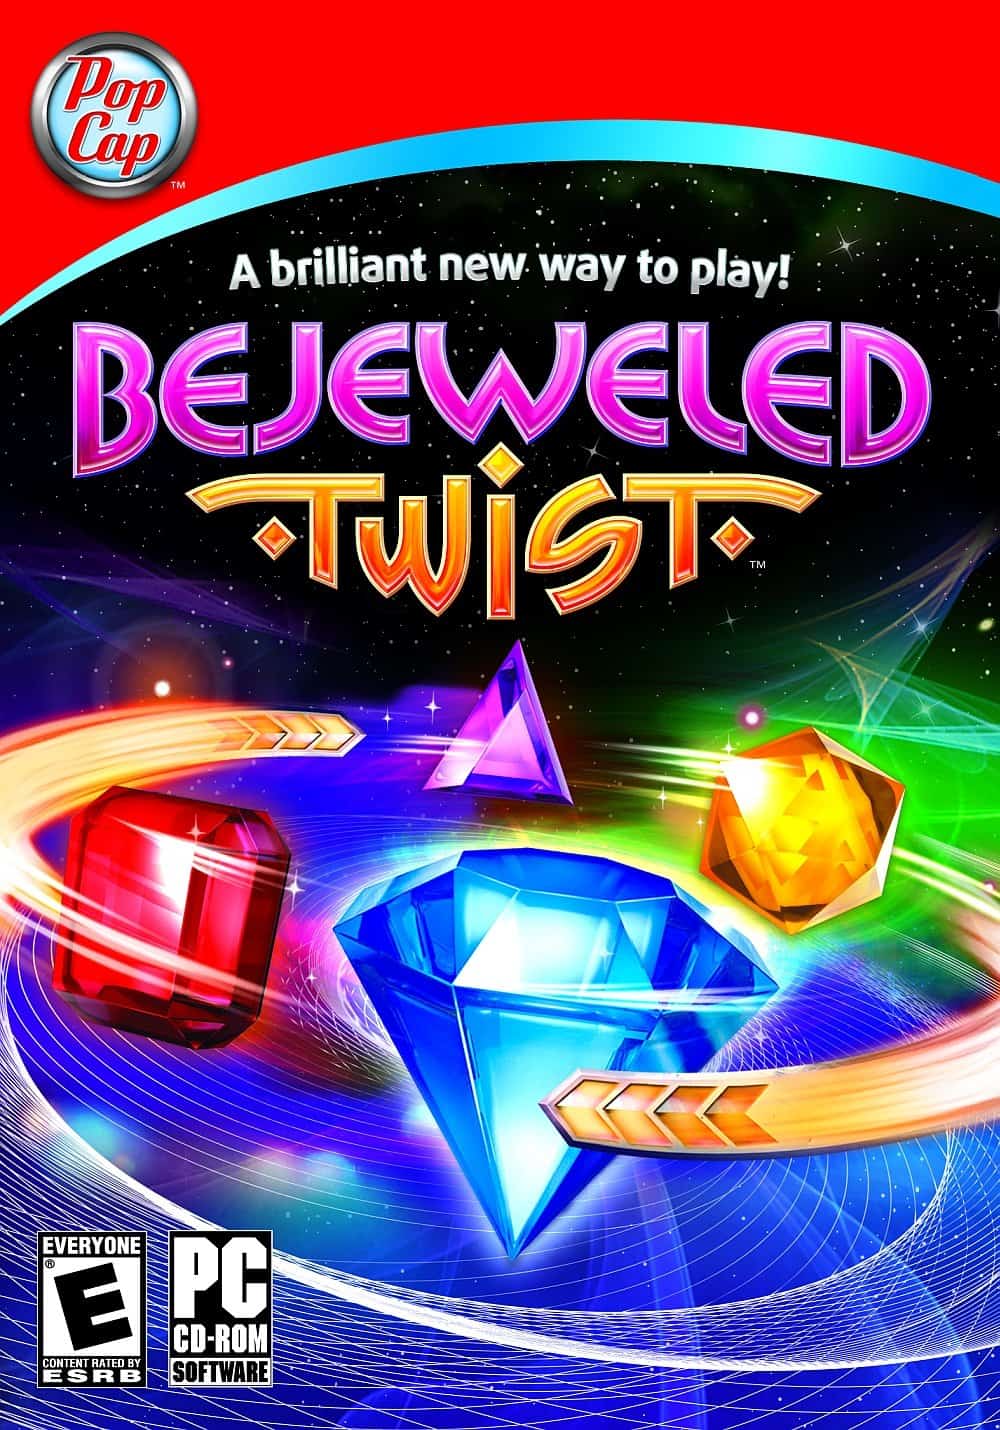 popcap game bejeweled 3